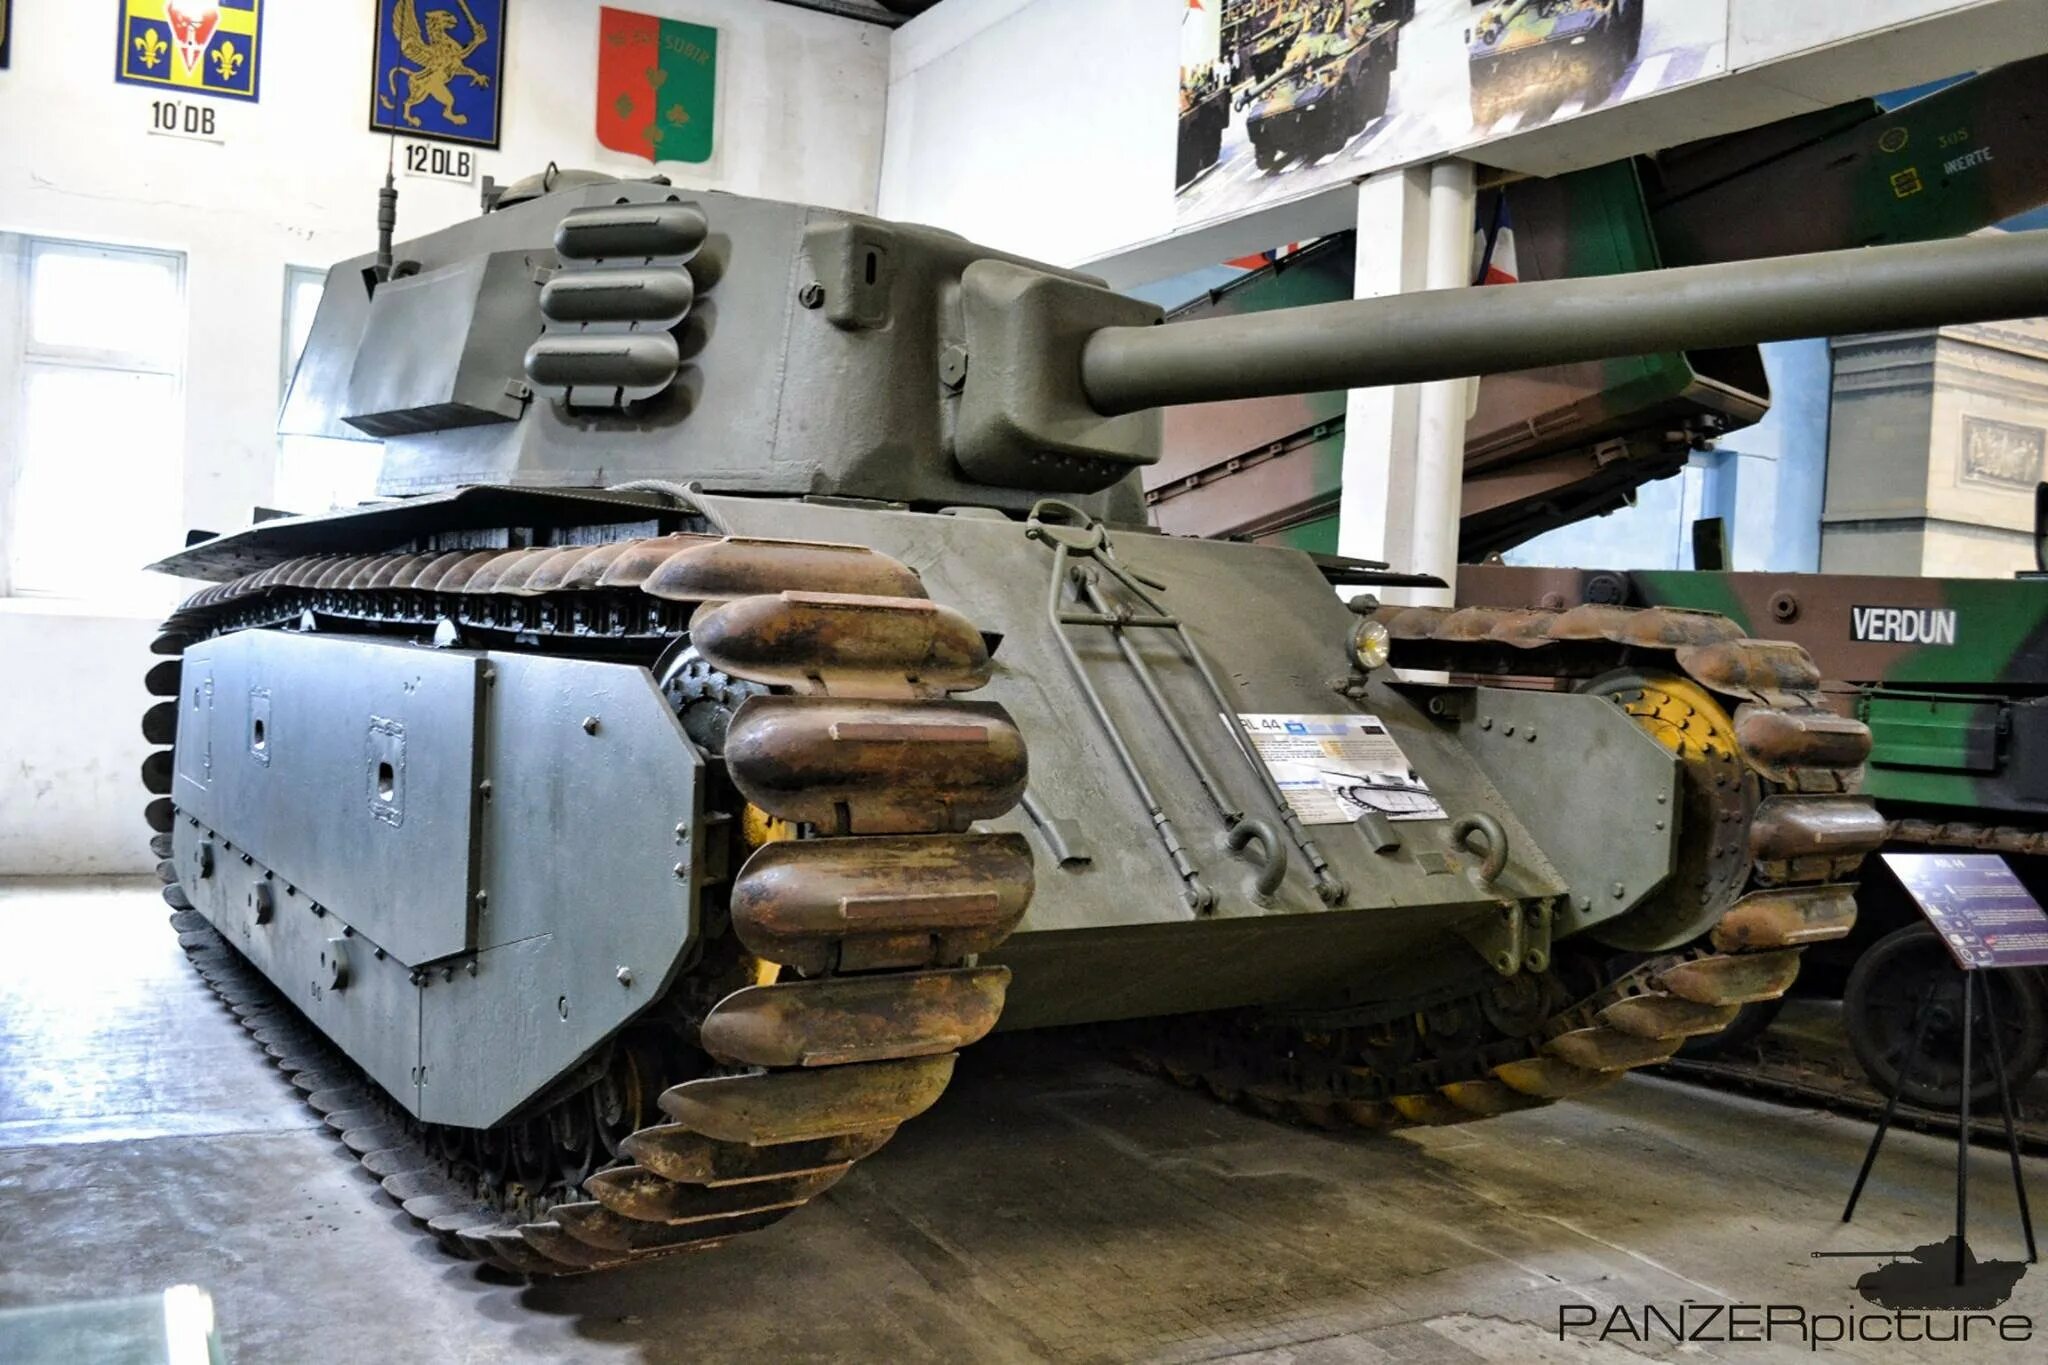 Arl 44. Танк ARL 44. Арл 44 танк Франции. Французский тяжелый танк арл 44. ARL 44 В реальности.